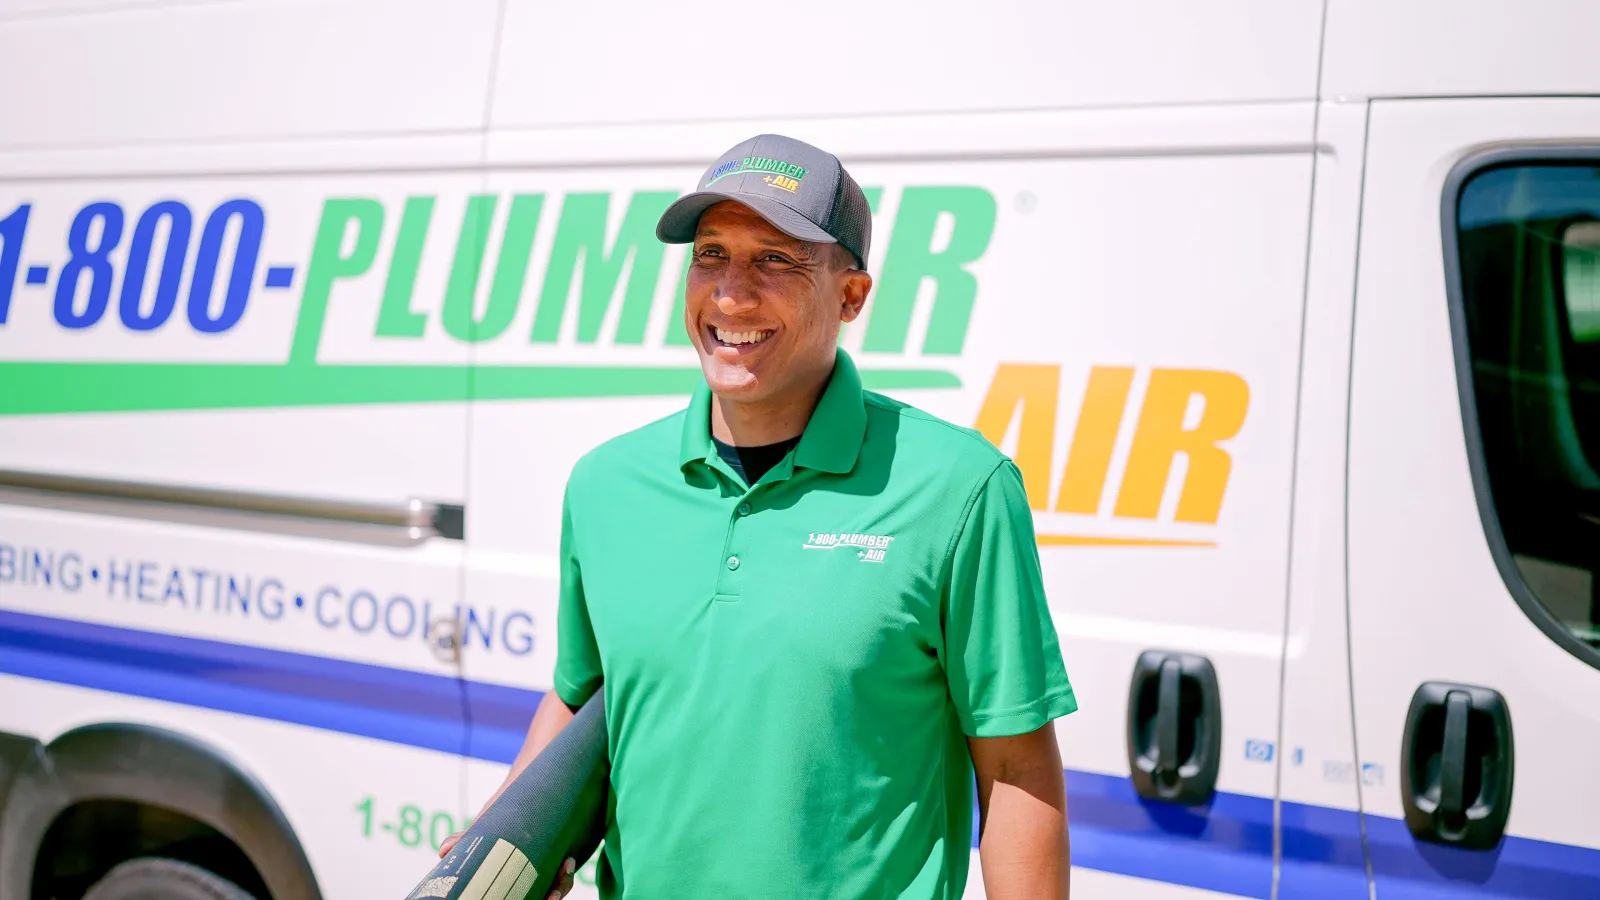 A 1-800-Plumber +Air of Portland Garbage disposal technician